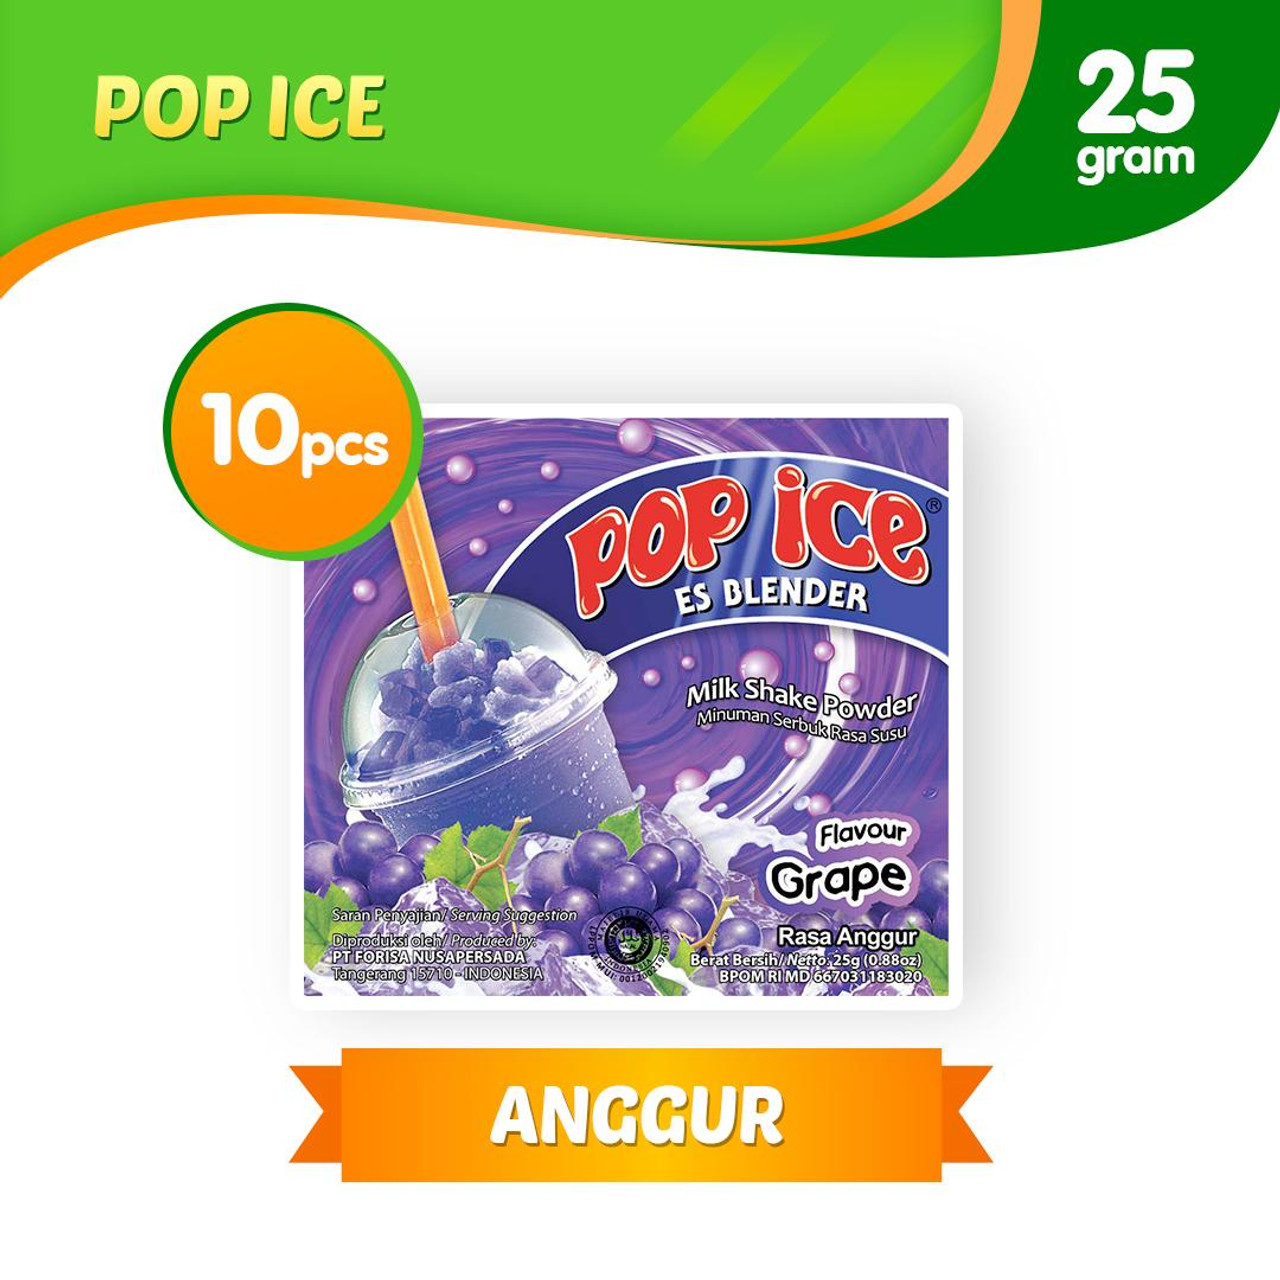 Pop Ice Milk Shake Powder - Grape Flavor, 25 gram (10 sachet)